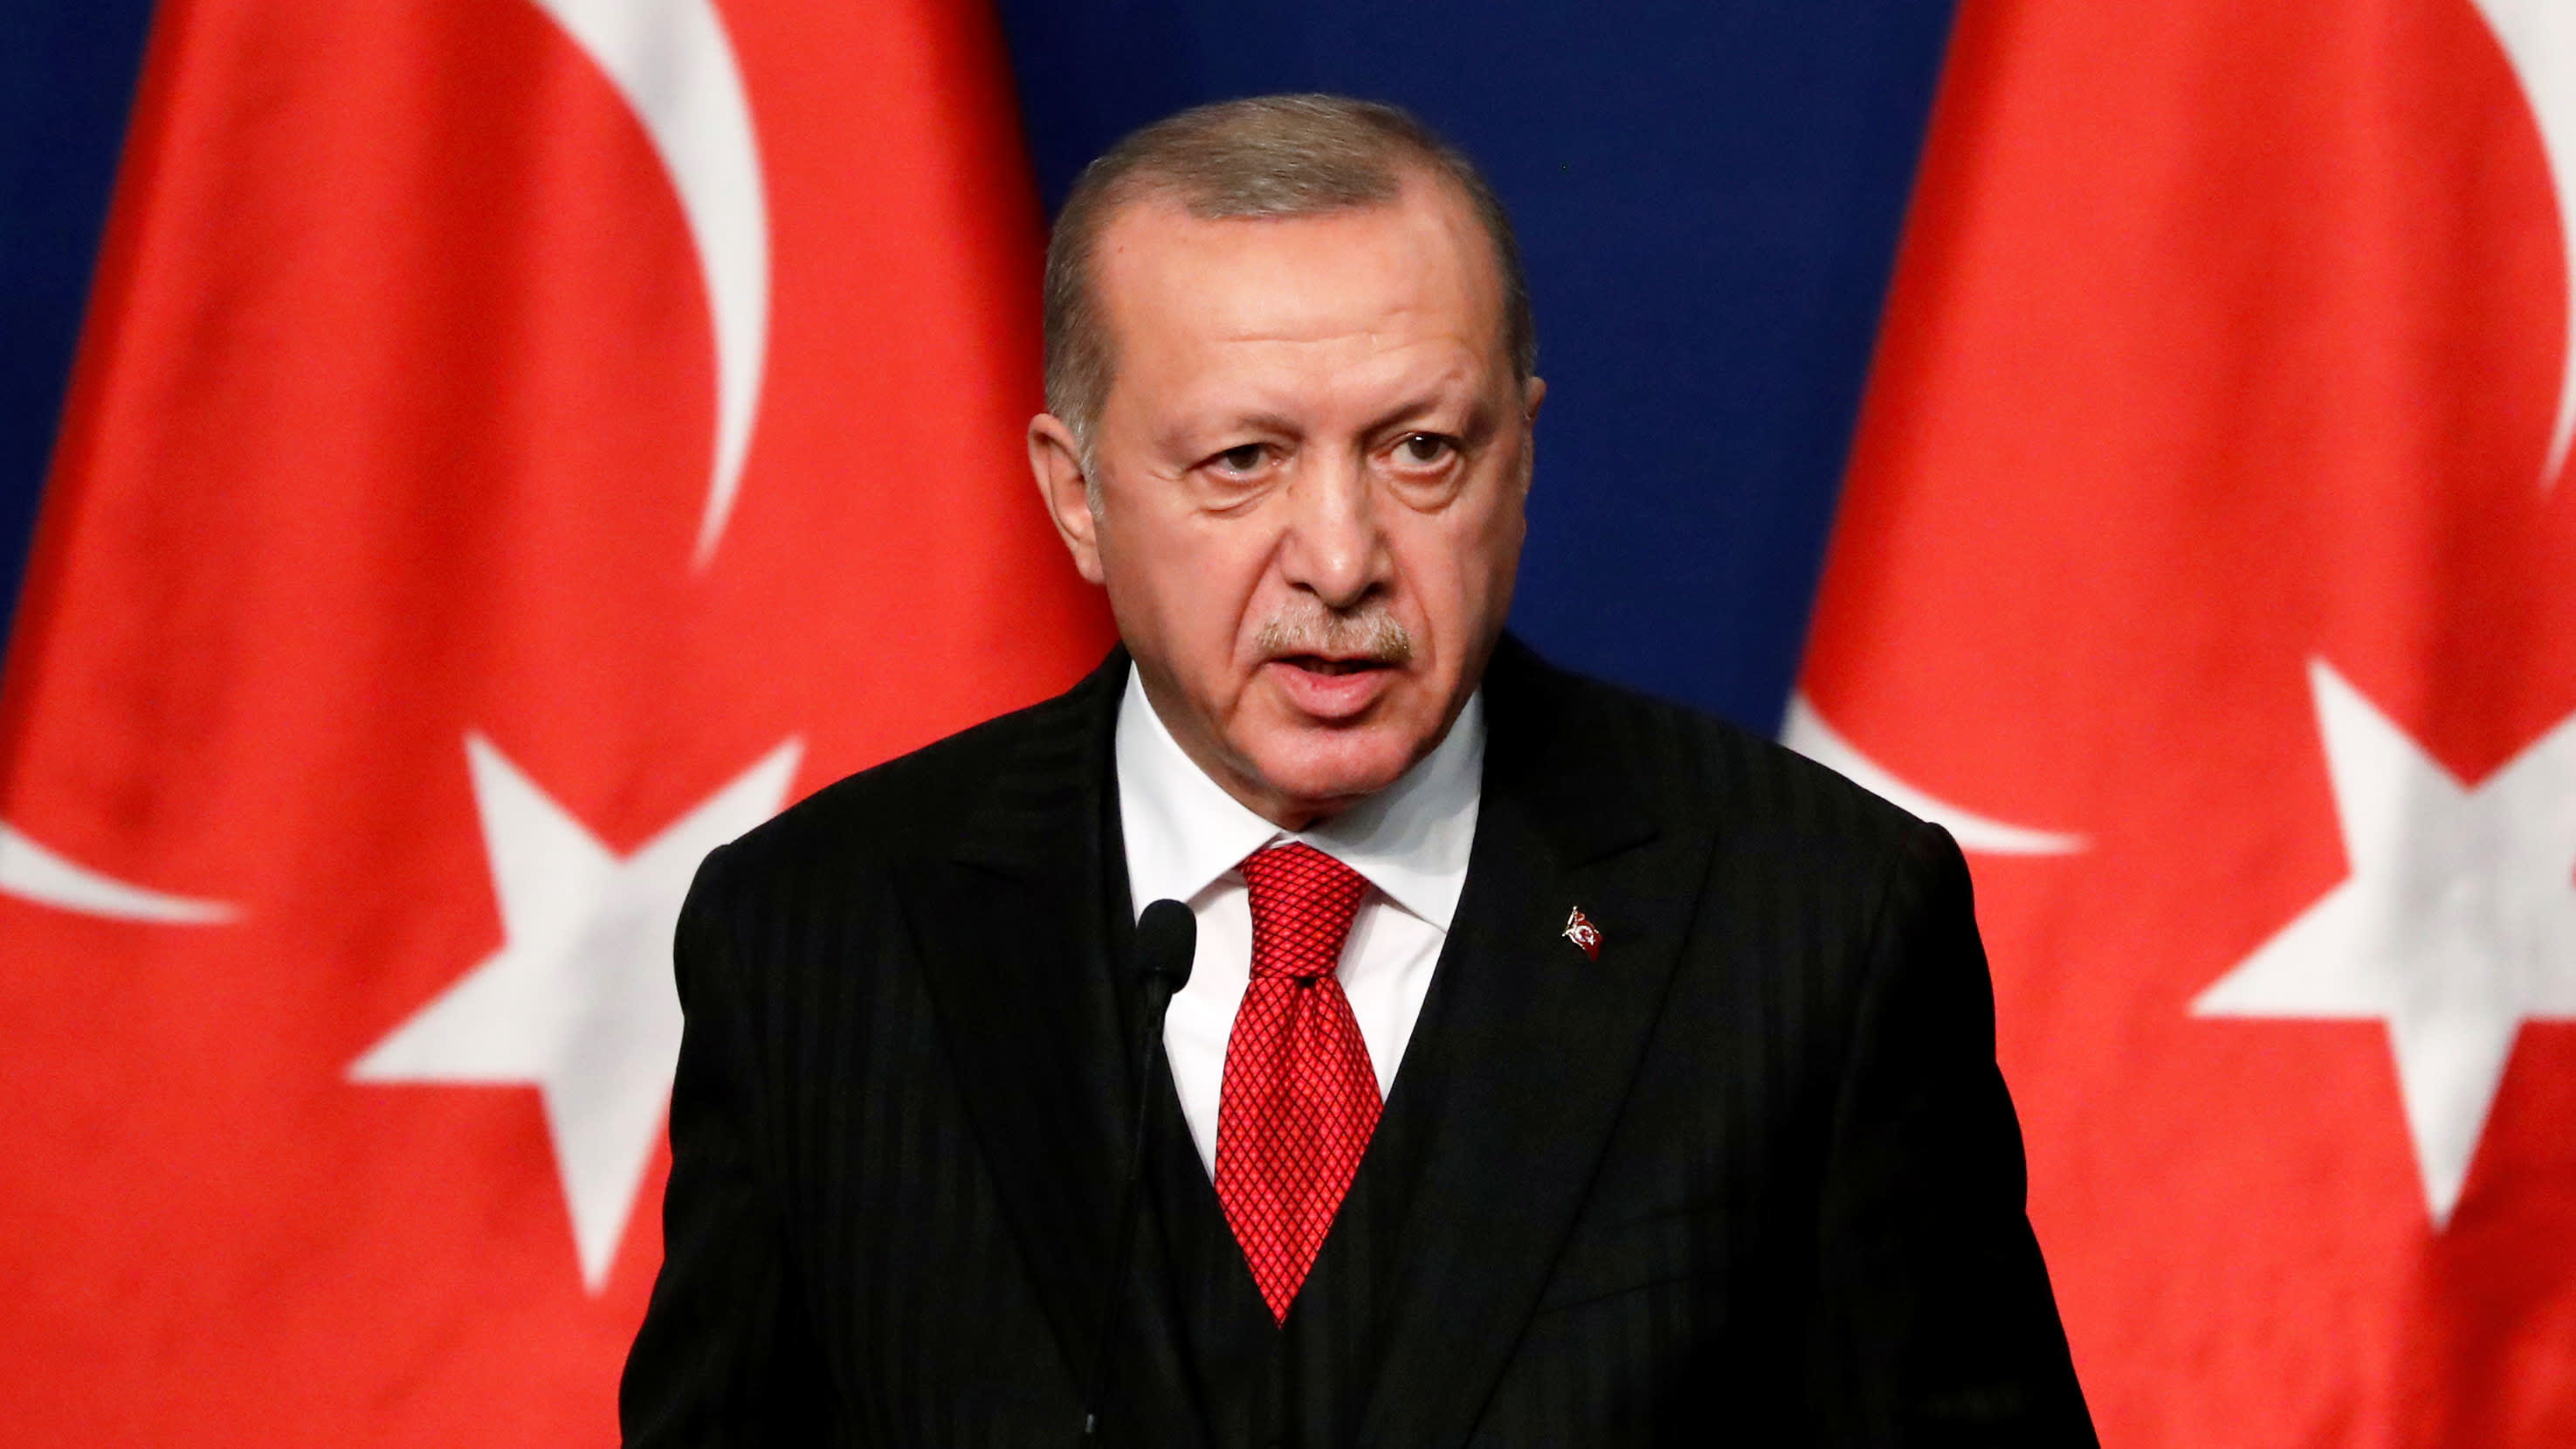 Turkish lira plummets to ‘insane’ historic low after President Erdogan sparks sell-off